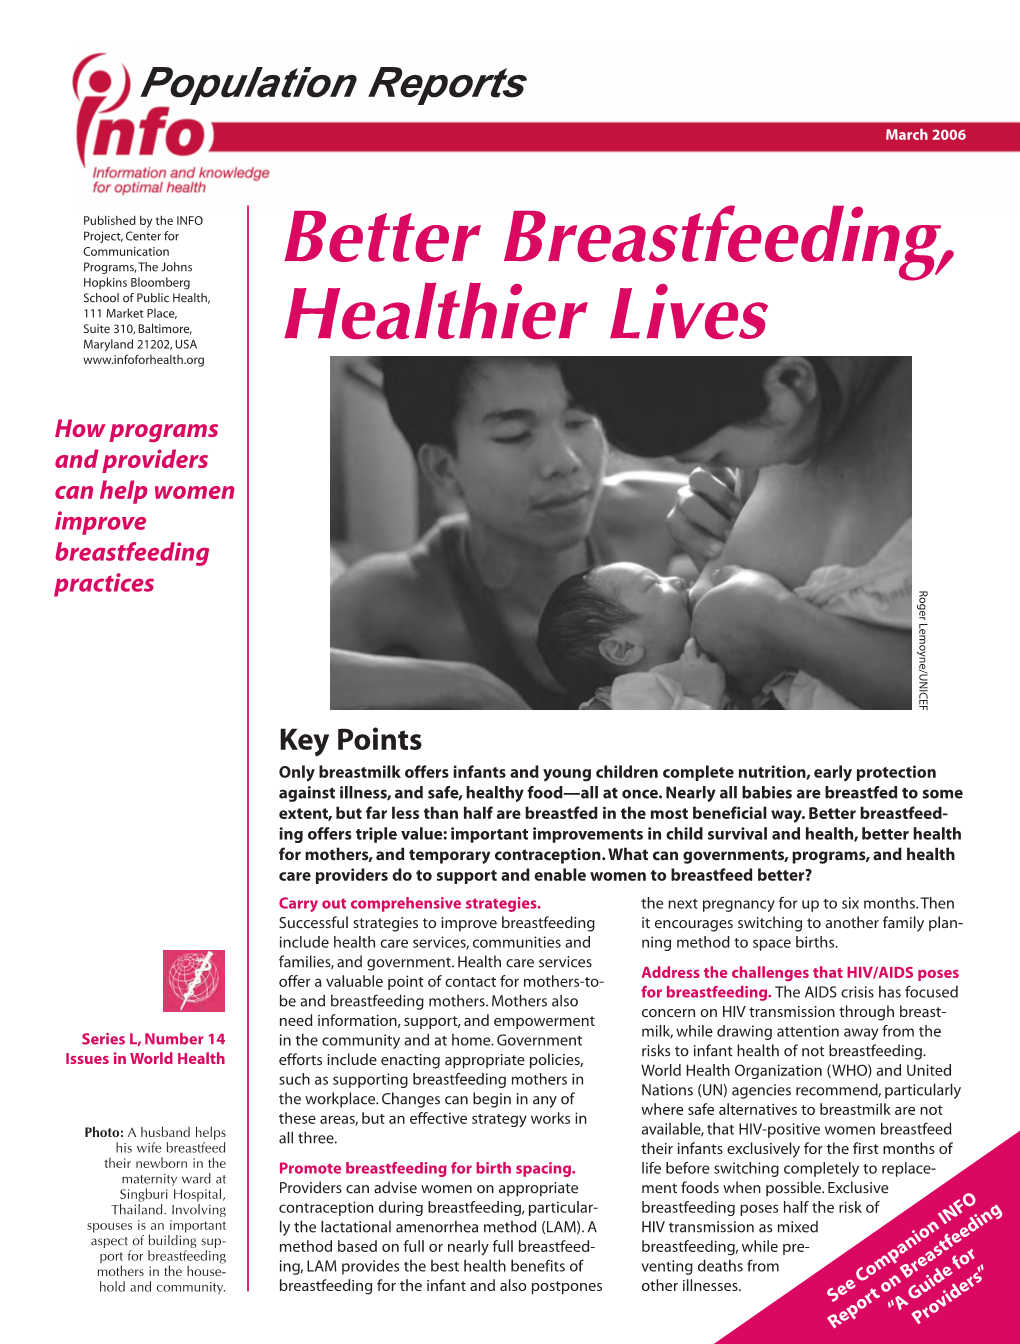 Better Breastfeeding, Healthier Lives